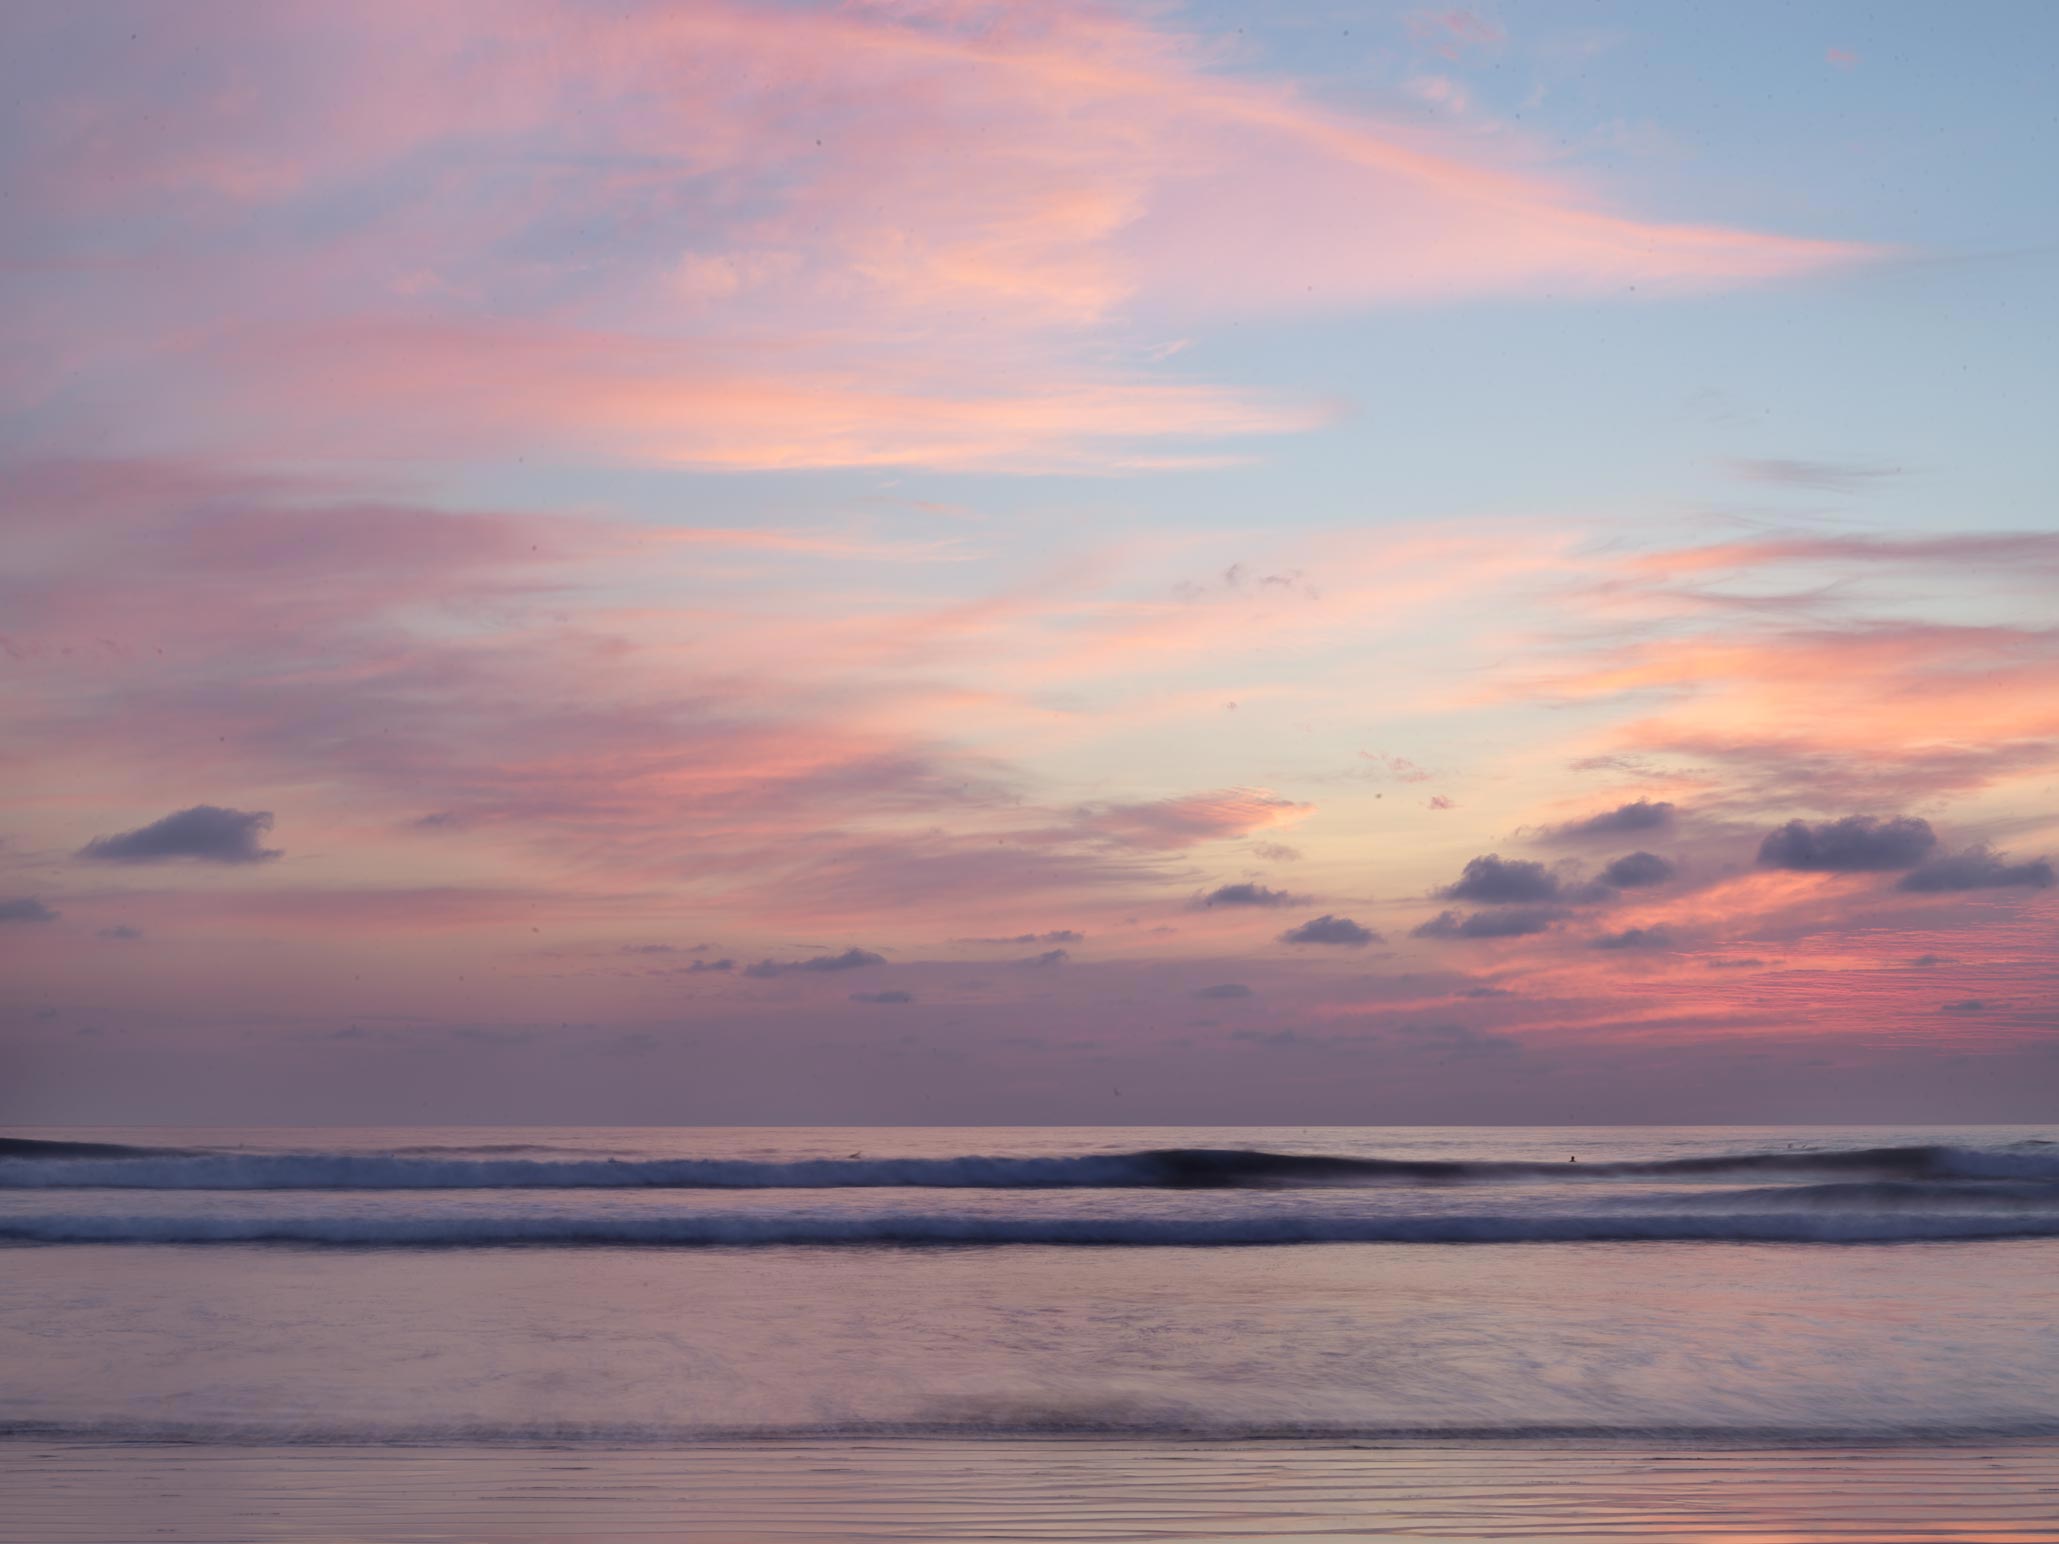 Playa Guiones #1447  |  Costa Rica  |  Michael Gaillard